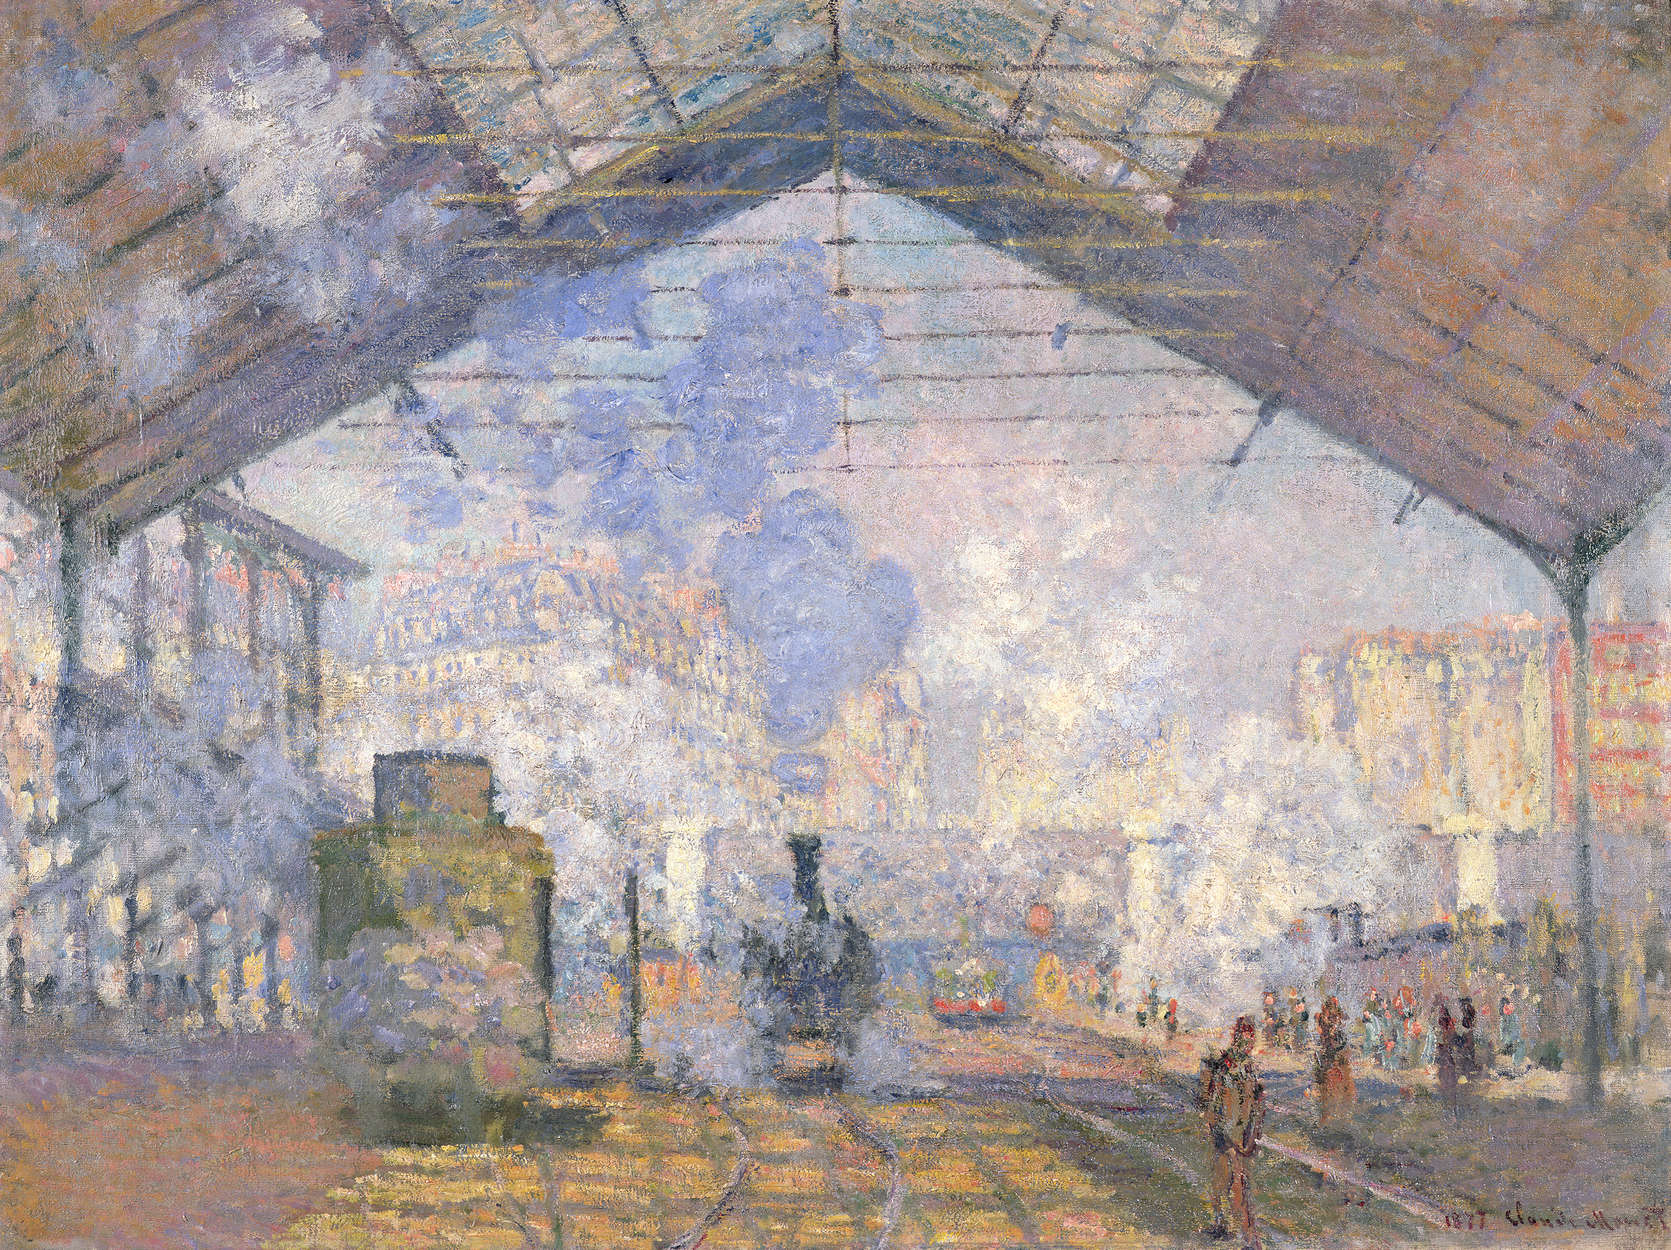             Mural "Gare St. Lazare" de Claude Monet
        